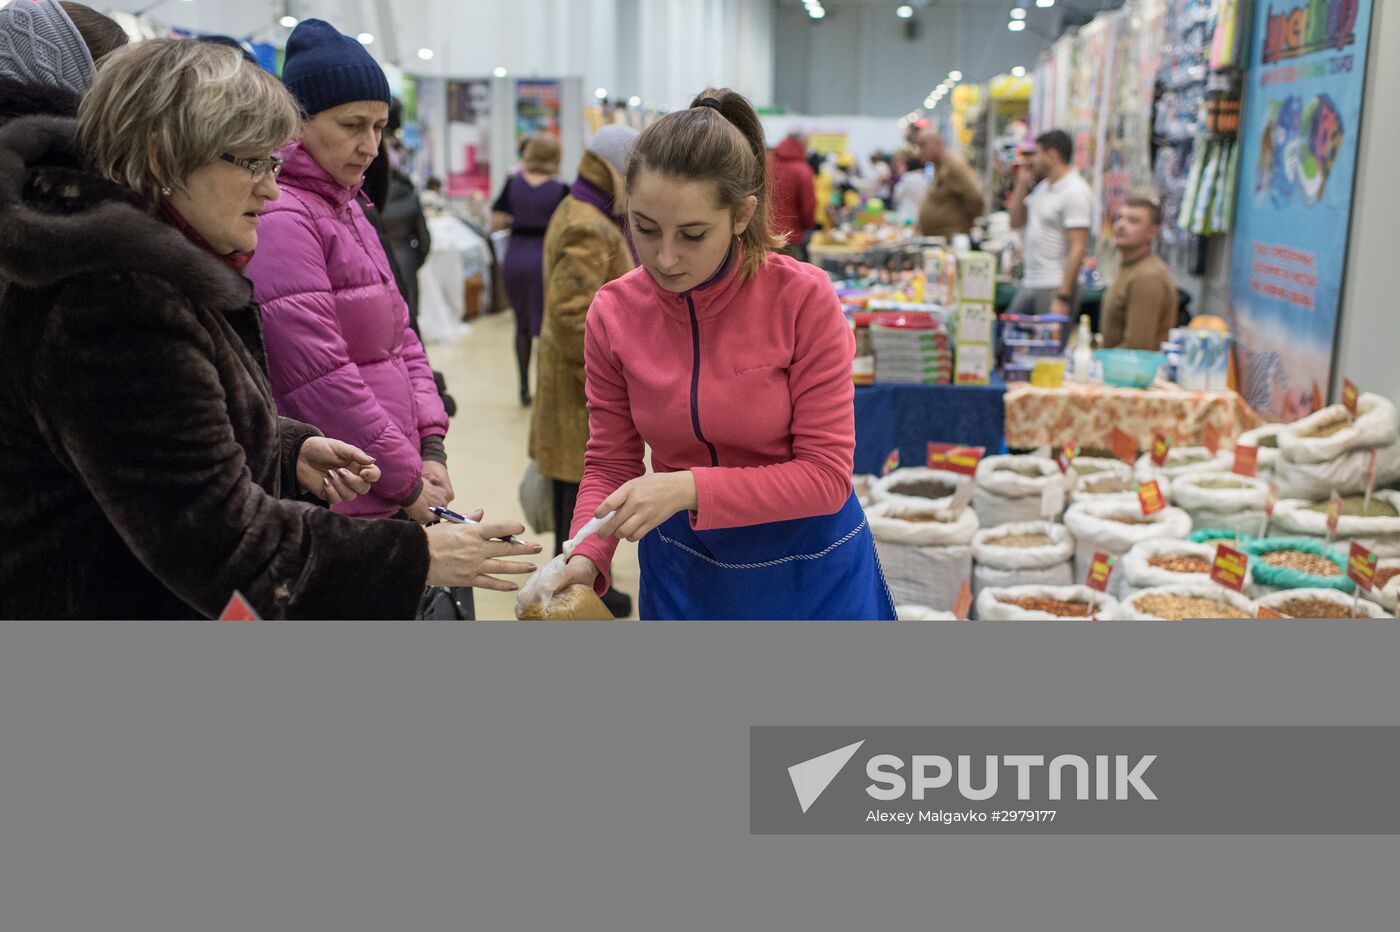 Omsk hosts "Siberian Agroindustrial Week-2016" exhibition-fair